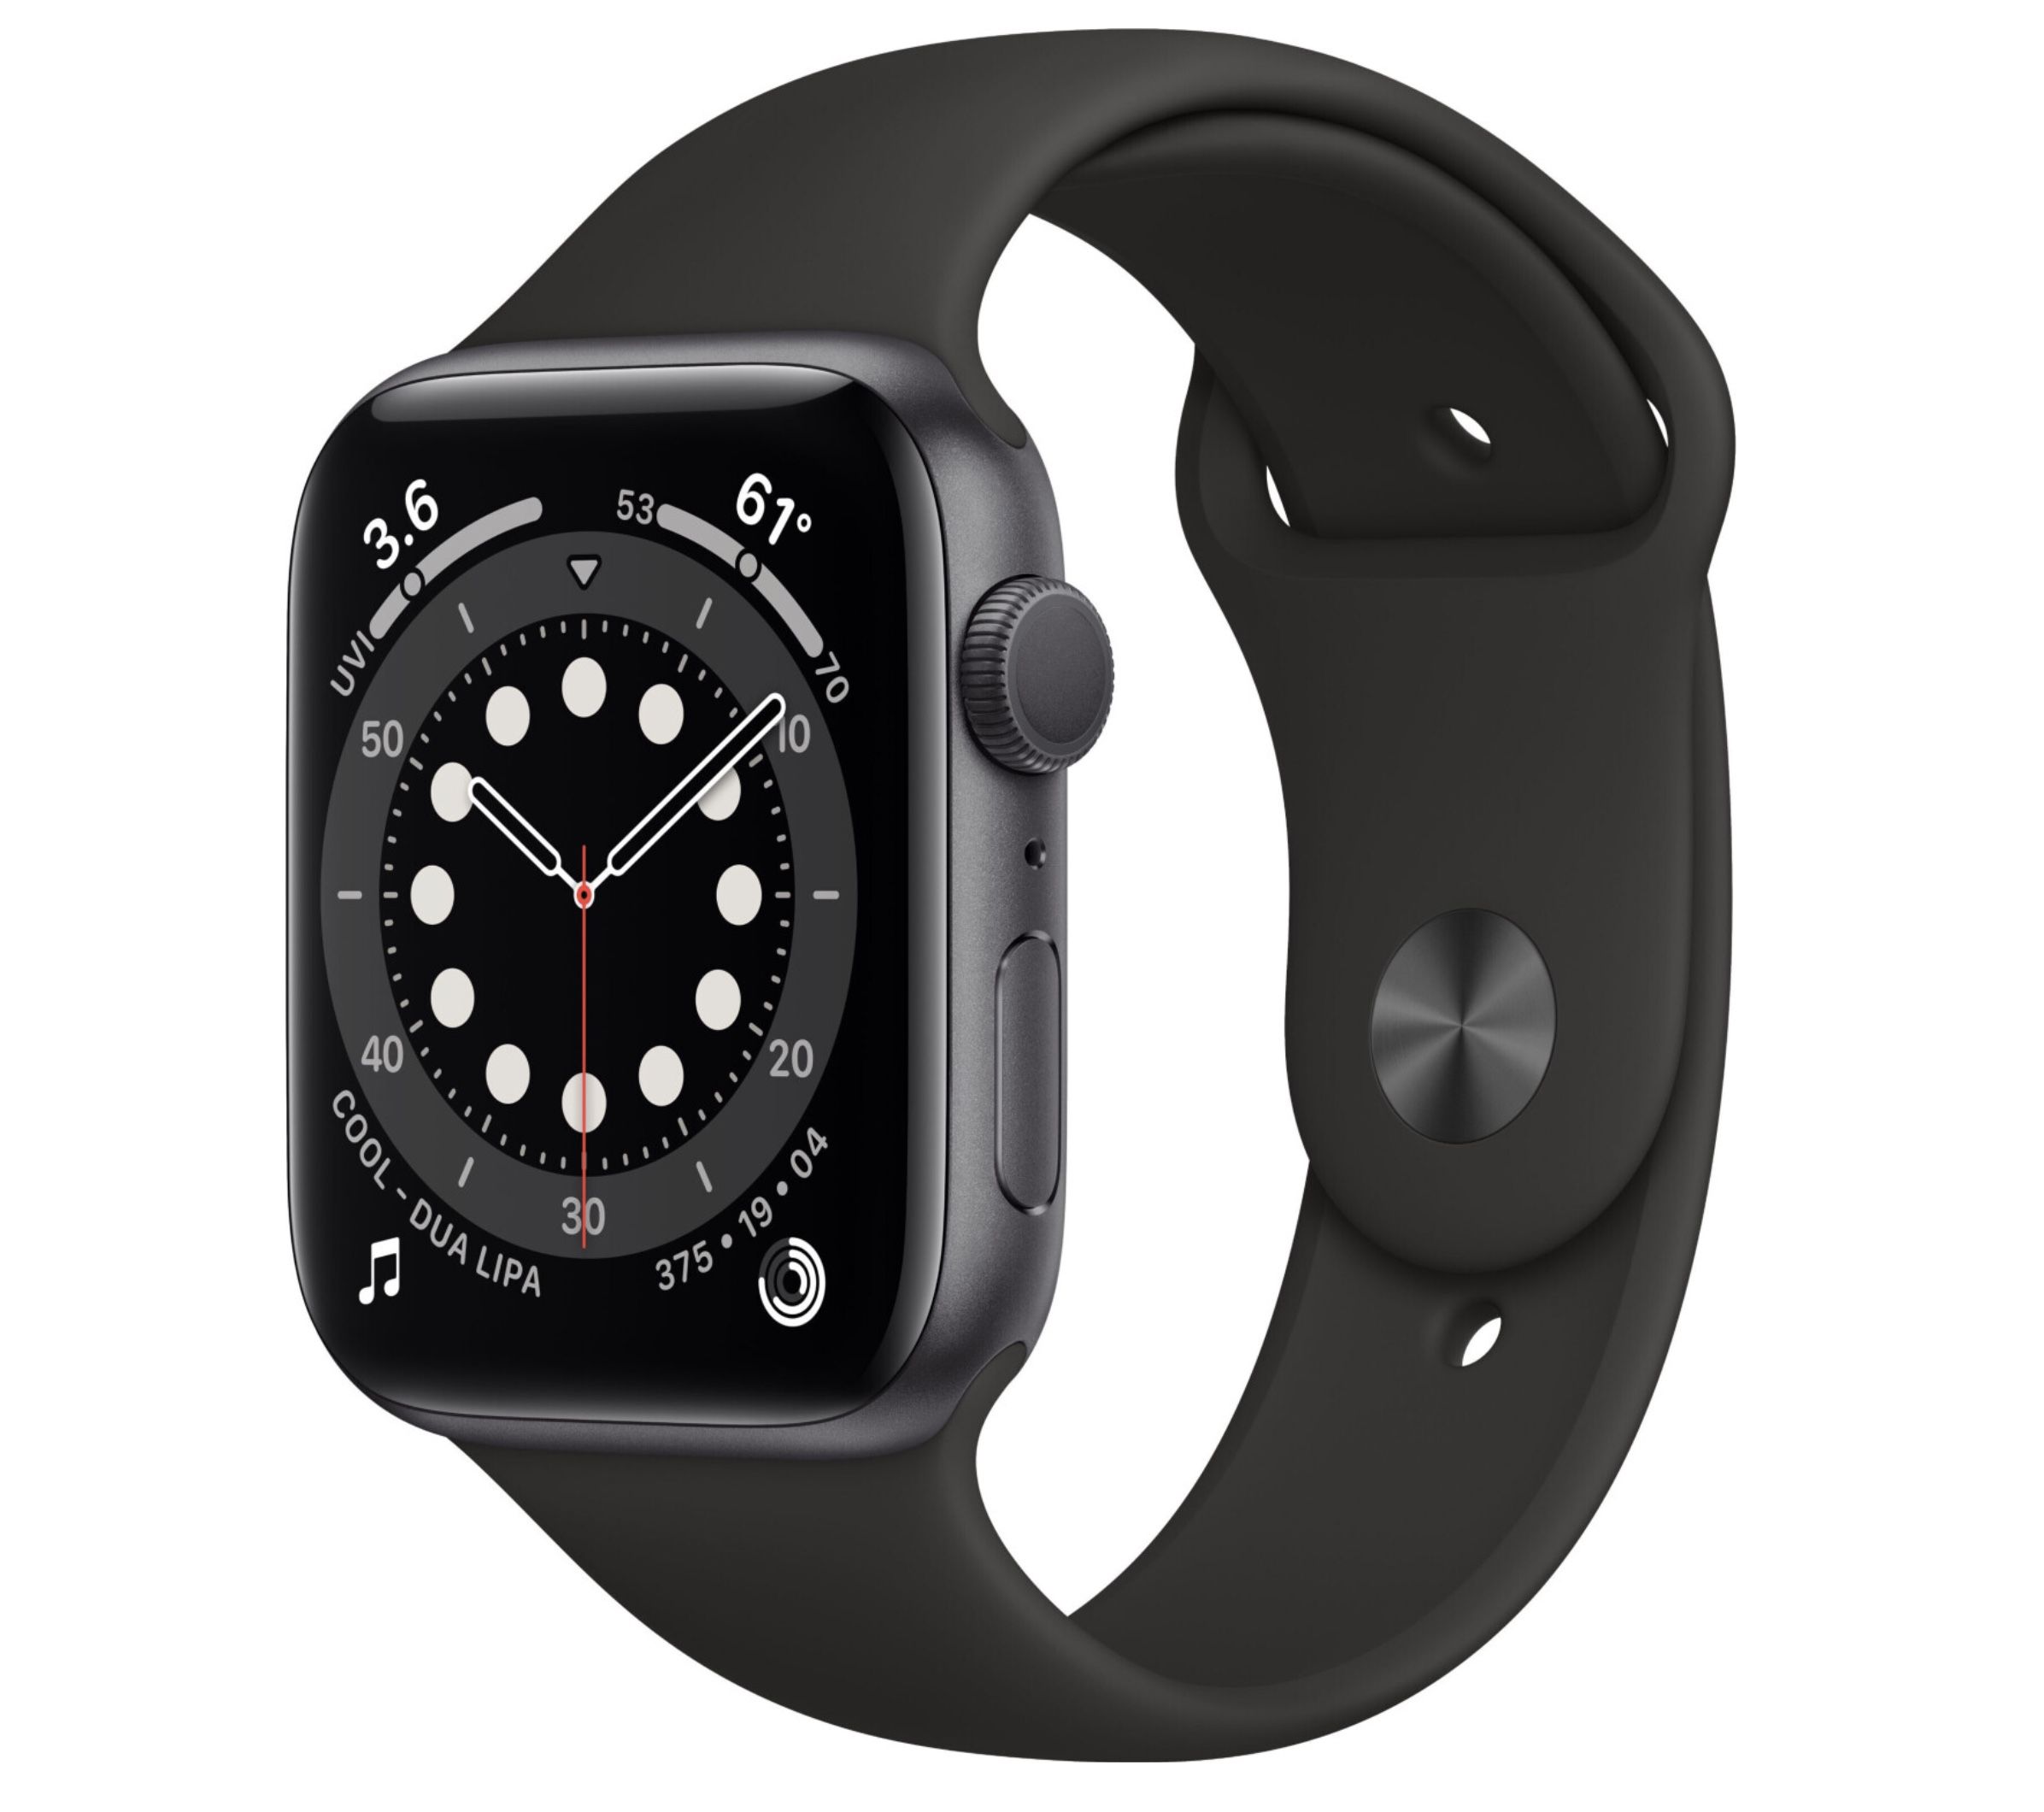 Apple Watch Series 6 (GPS) in Spacegrau 44mm Aluminium mit Sportarmband für 359€ (statt 411€)